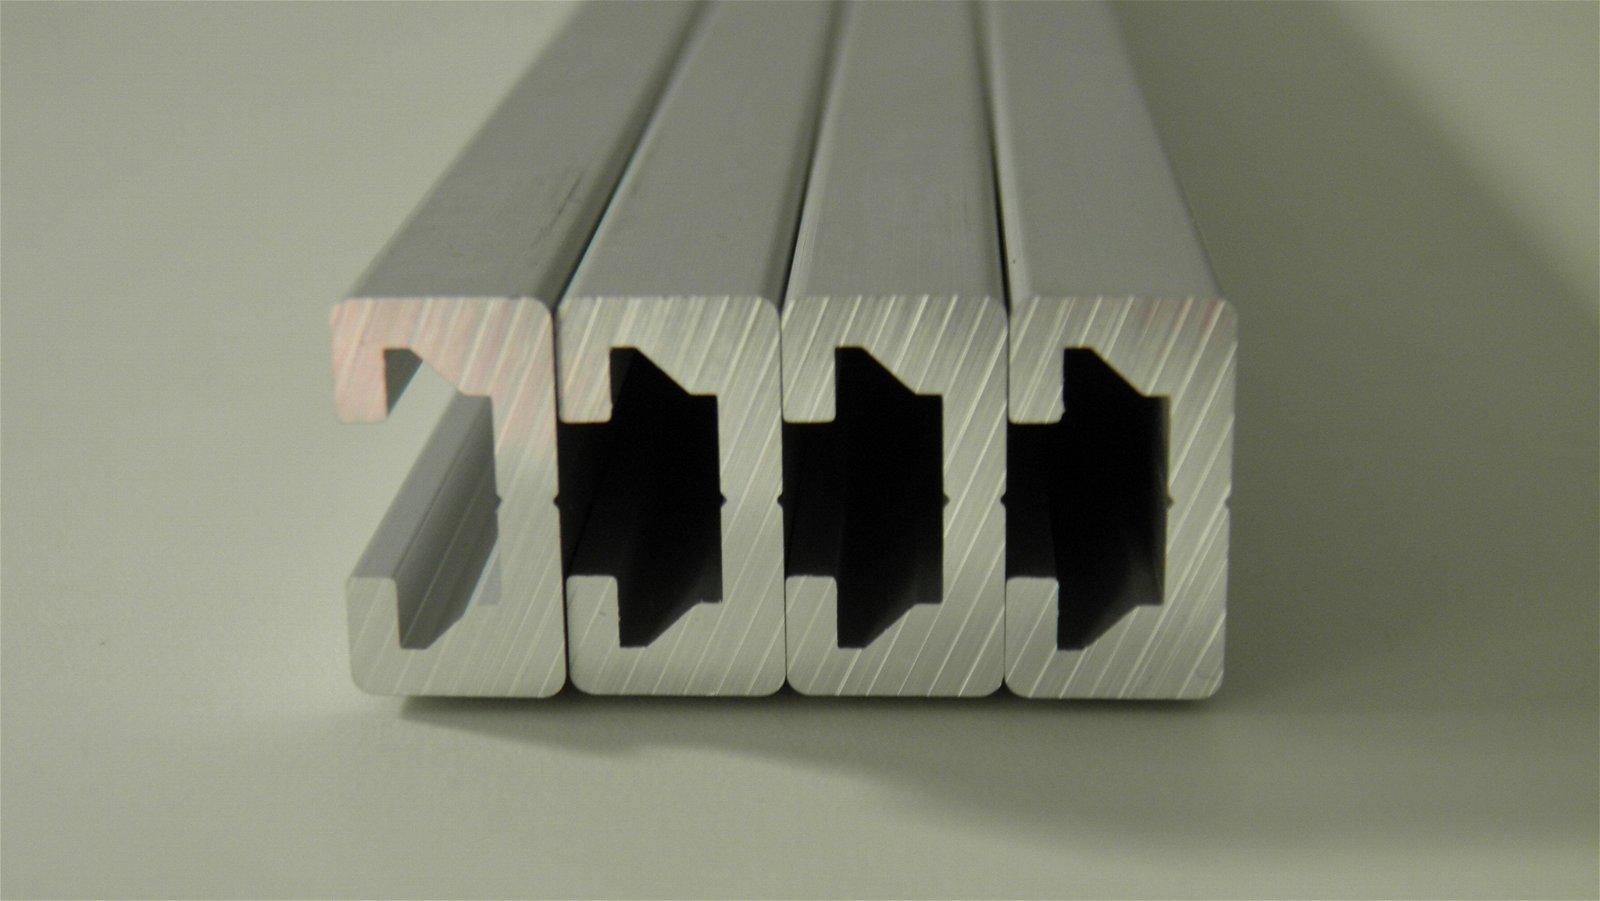 cnc machining industrial automation materials aluminium alloy t slot profilesl